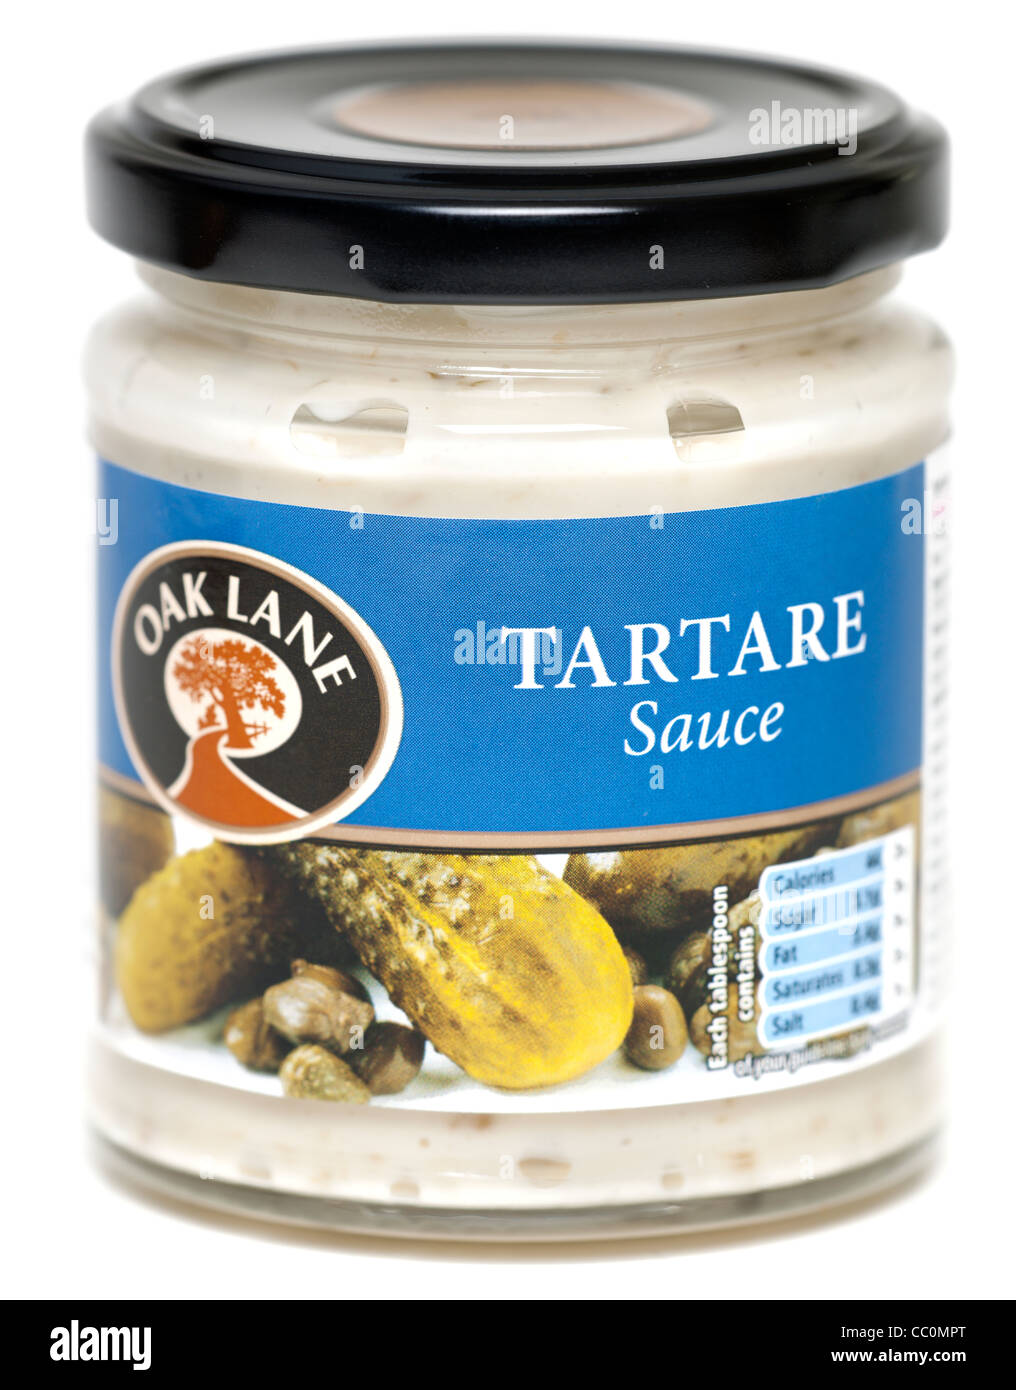 Glas von Oak Lane Tartare sauce Stockfoto